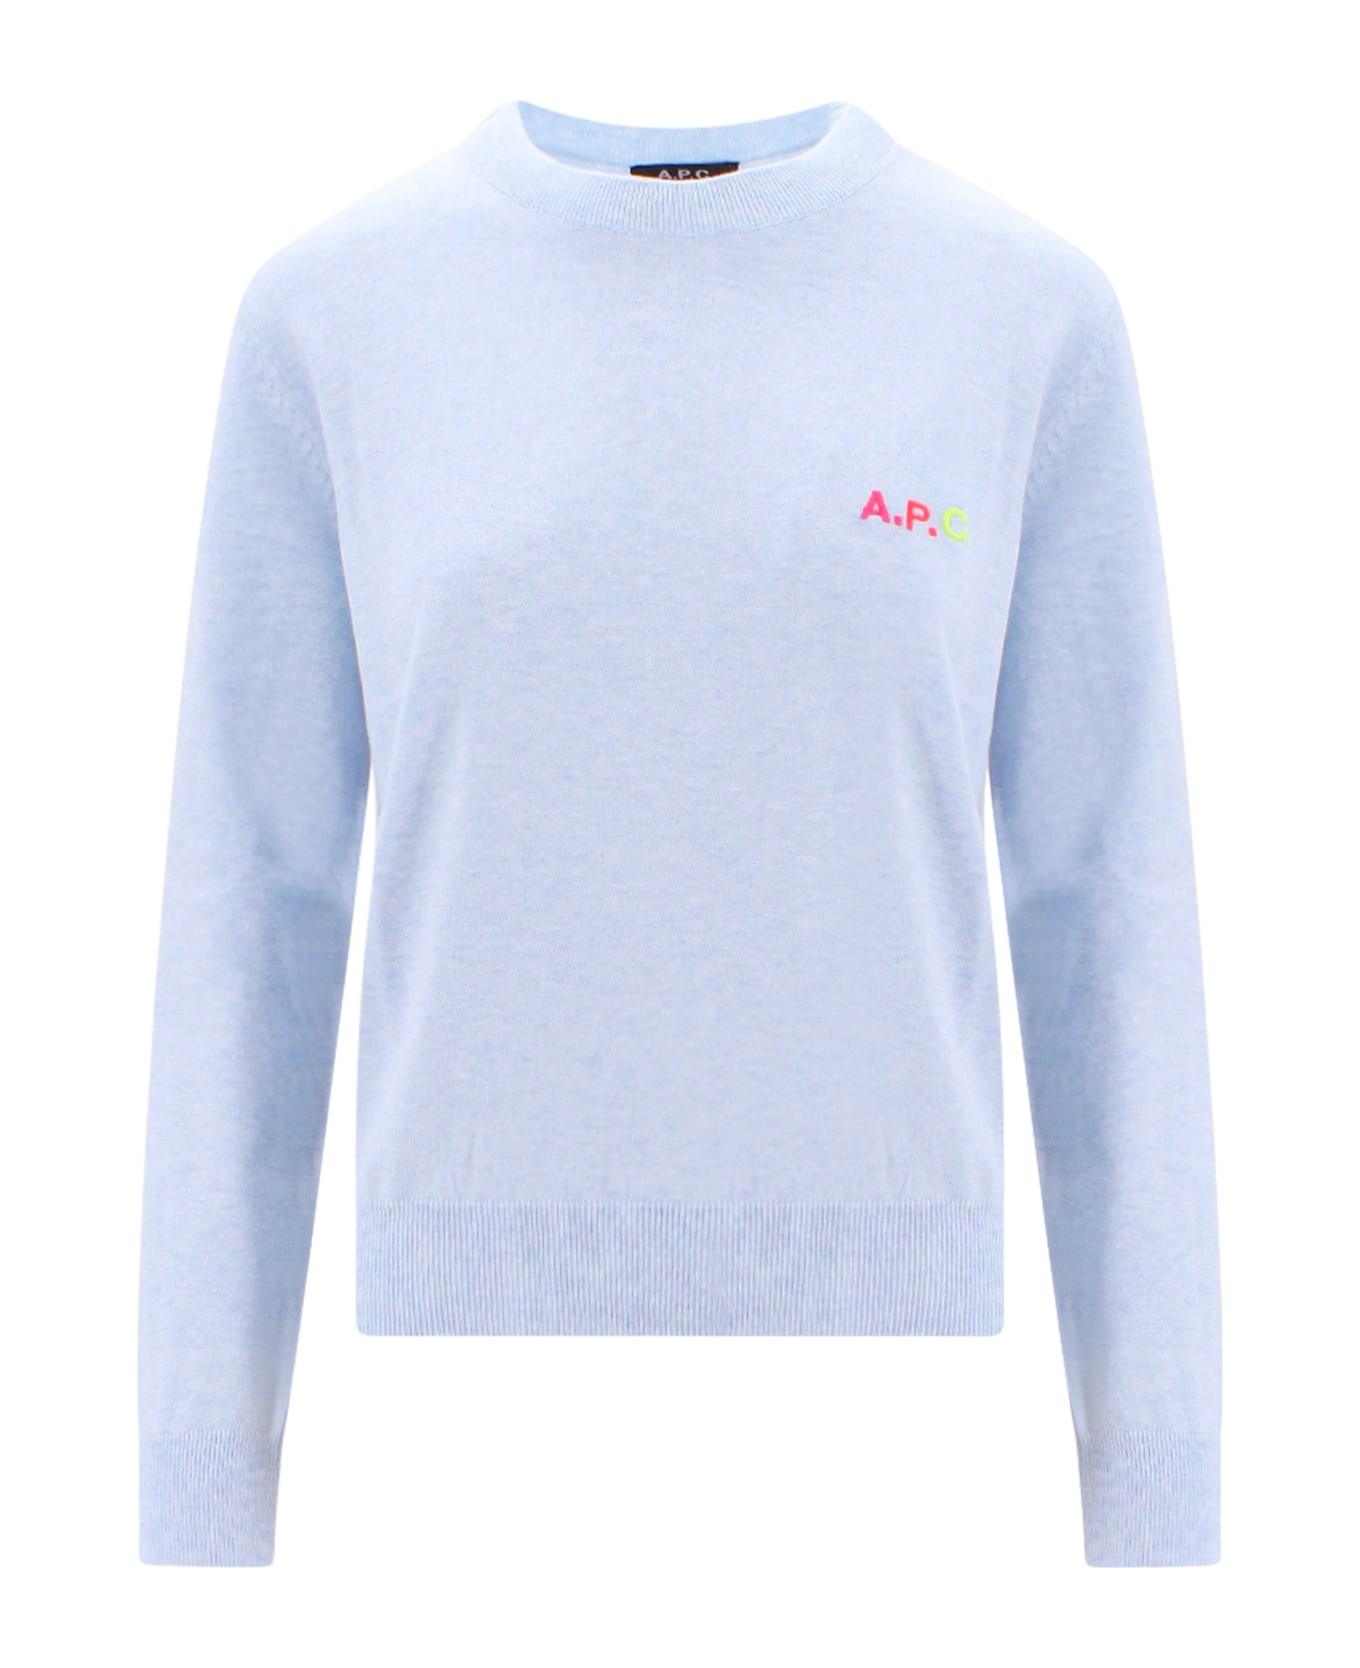 A.P.C. True Light Blue Cotton Sweater - Blue ニットウェア